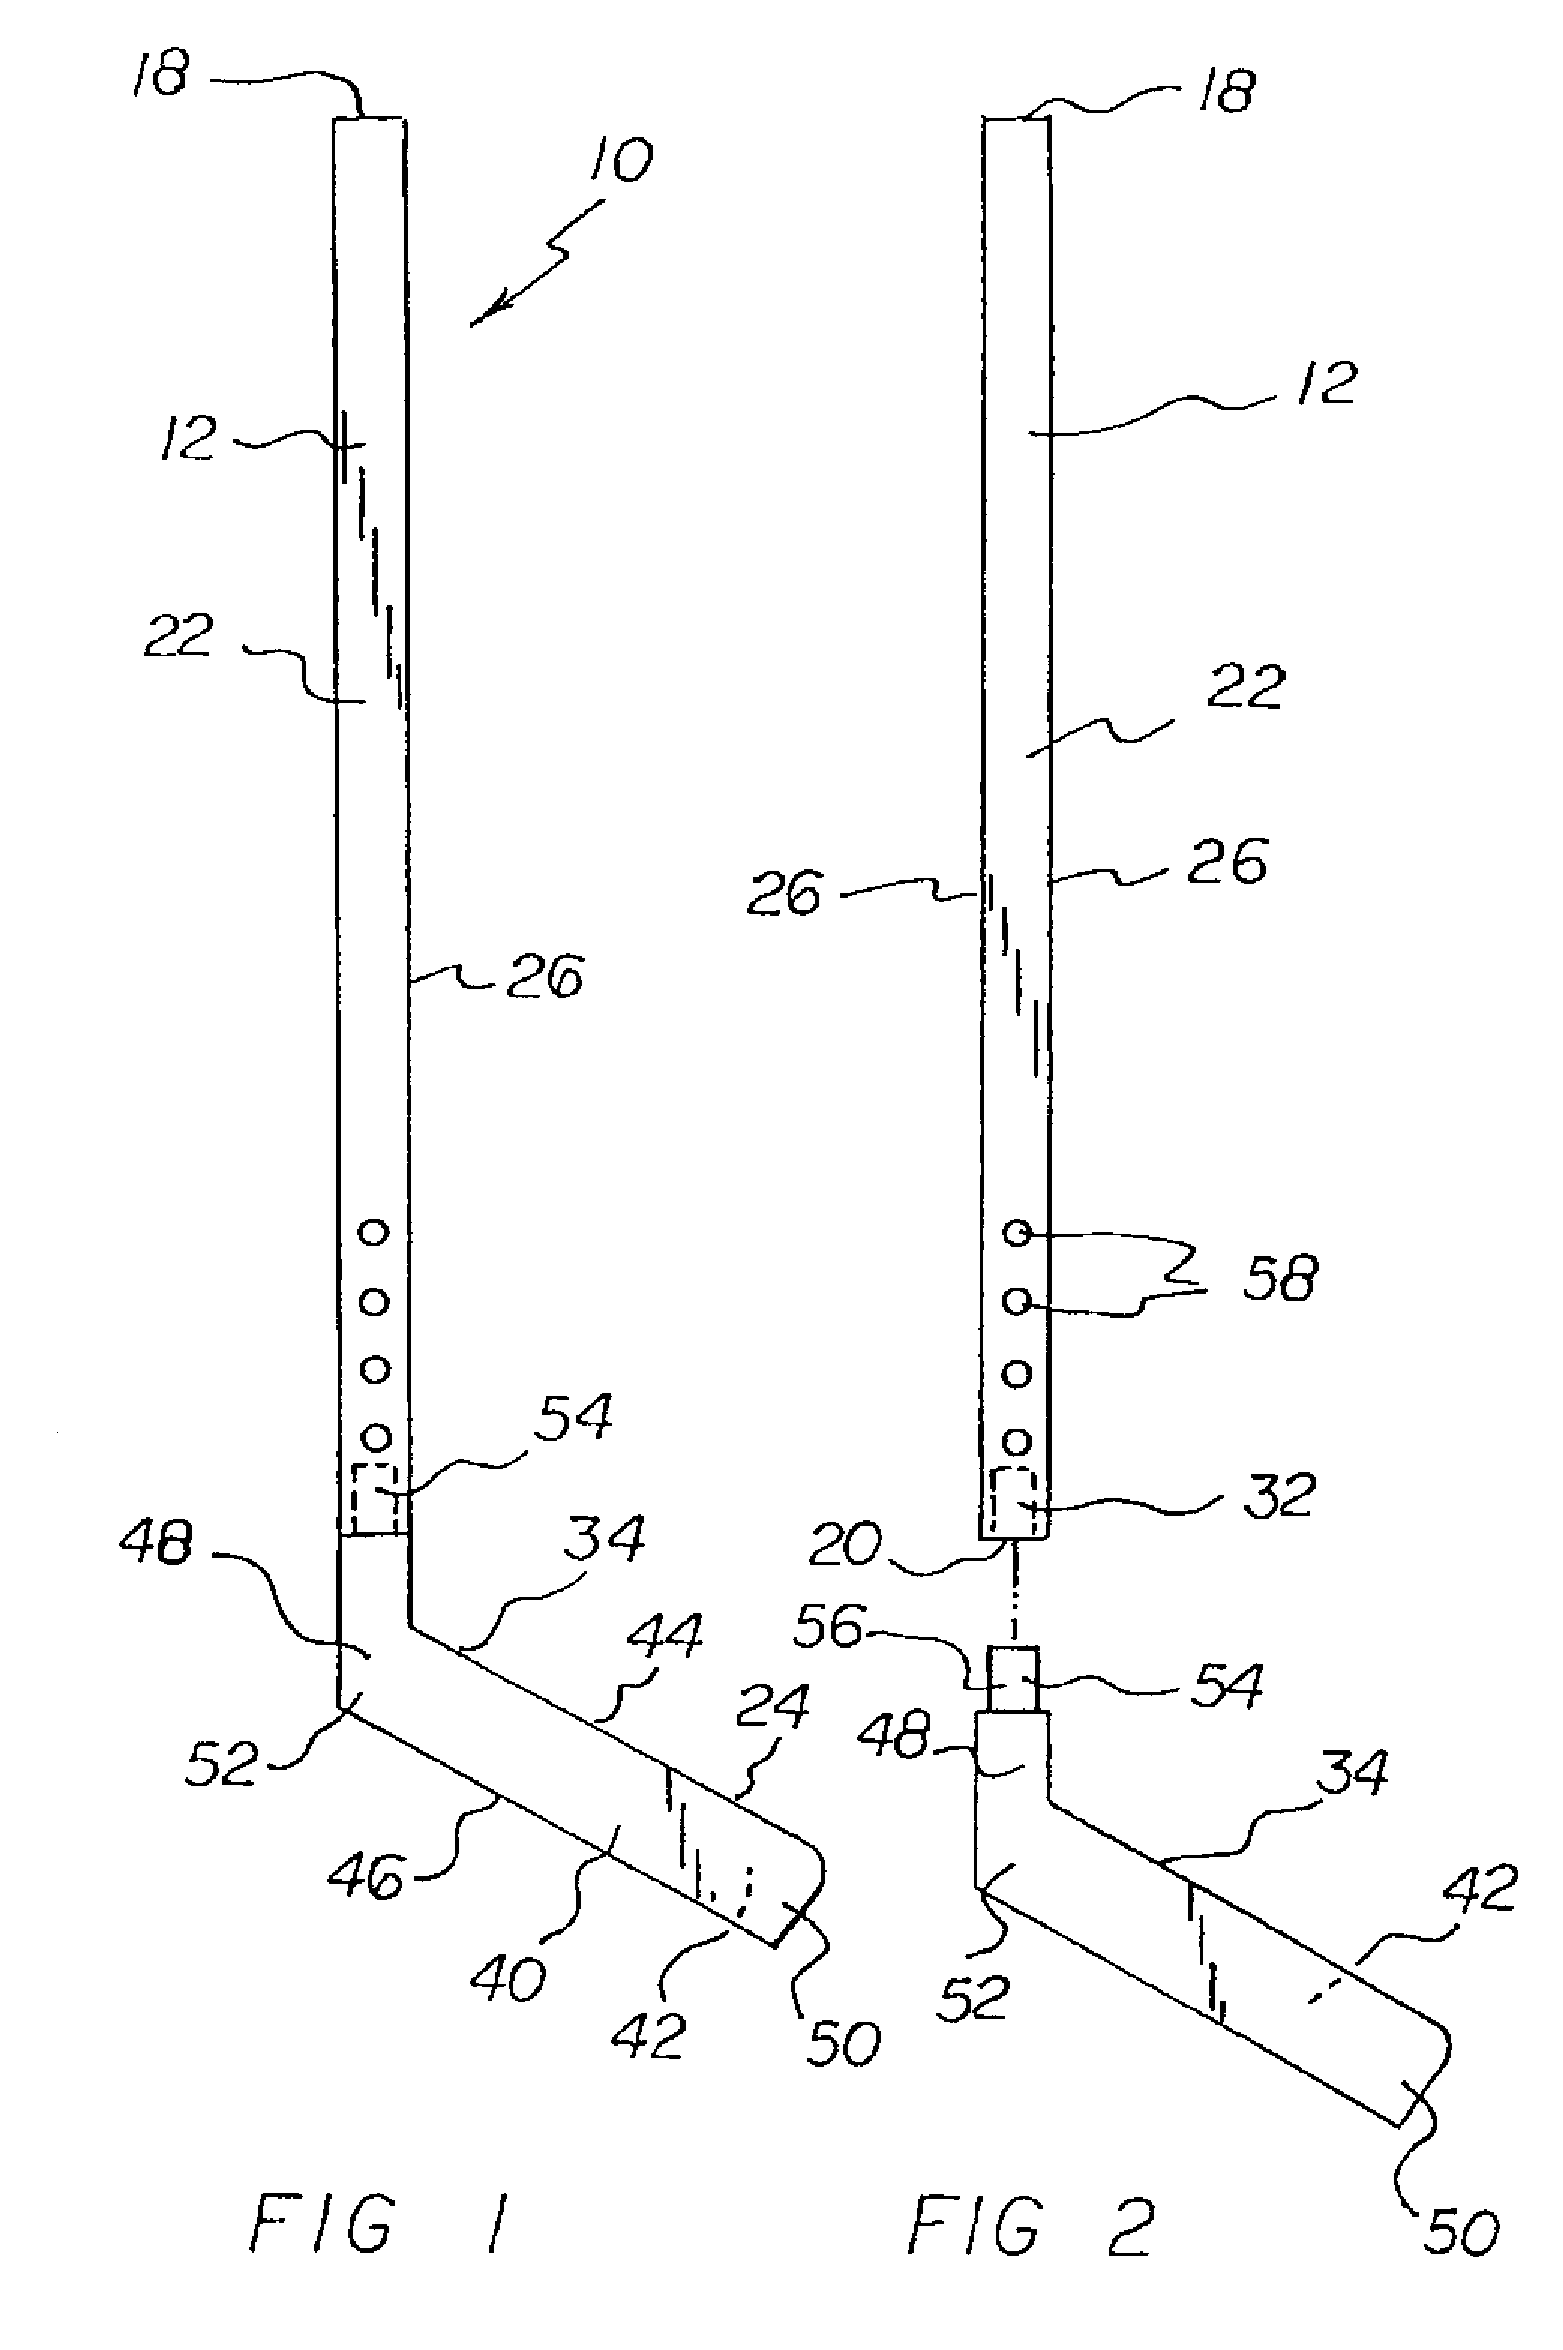 Composite hockey stick system